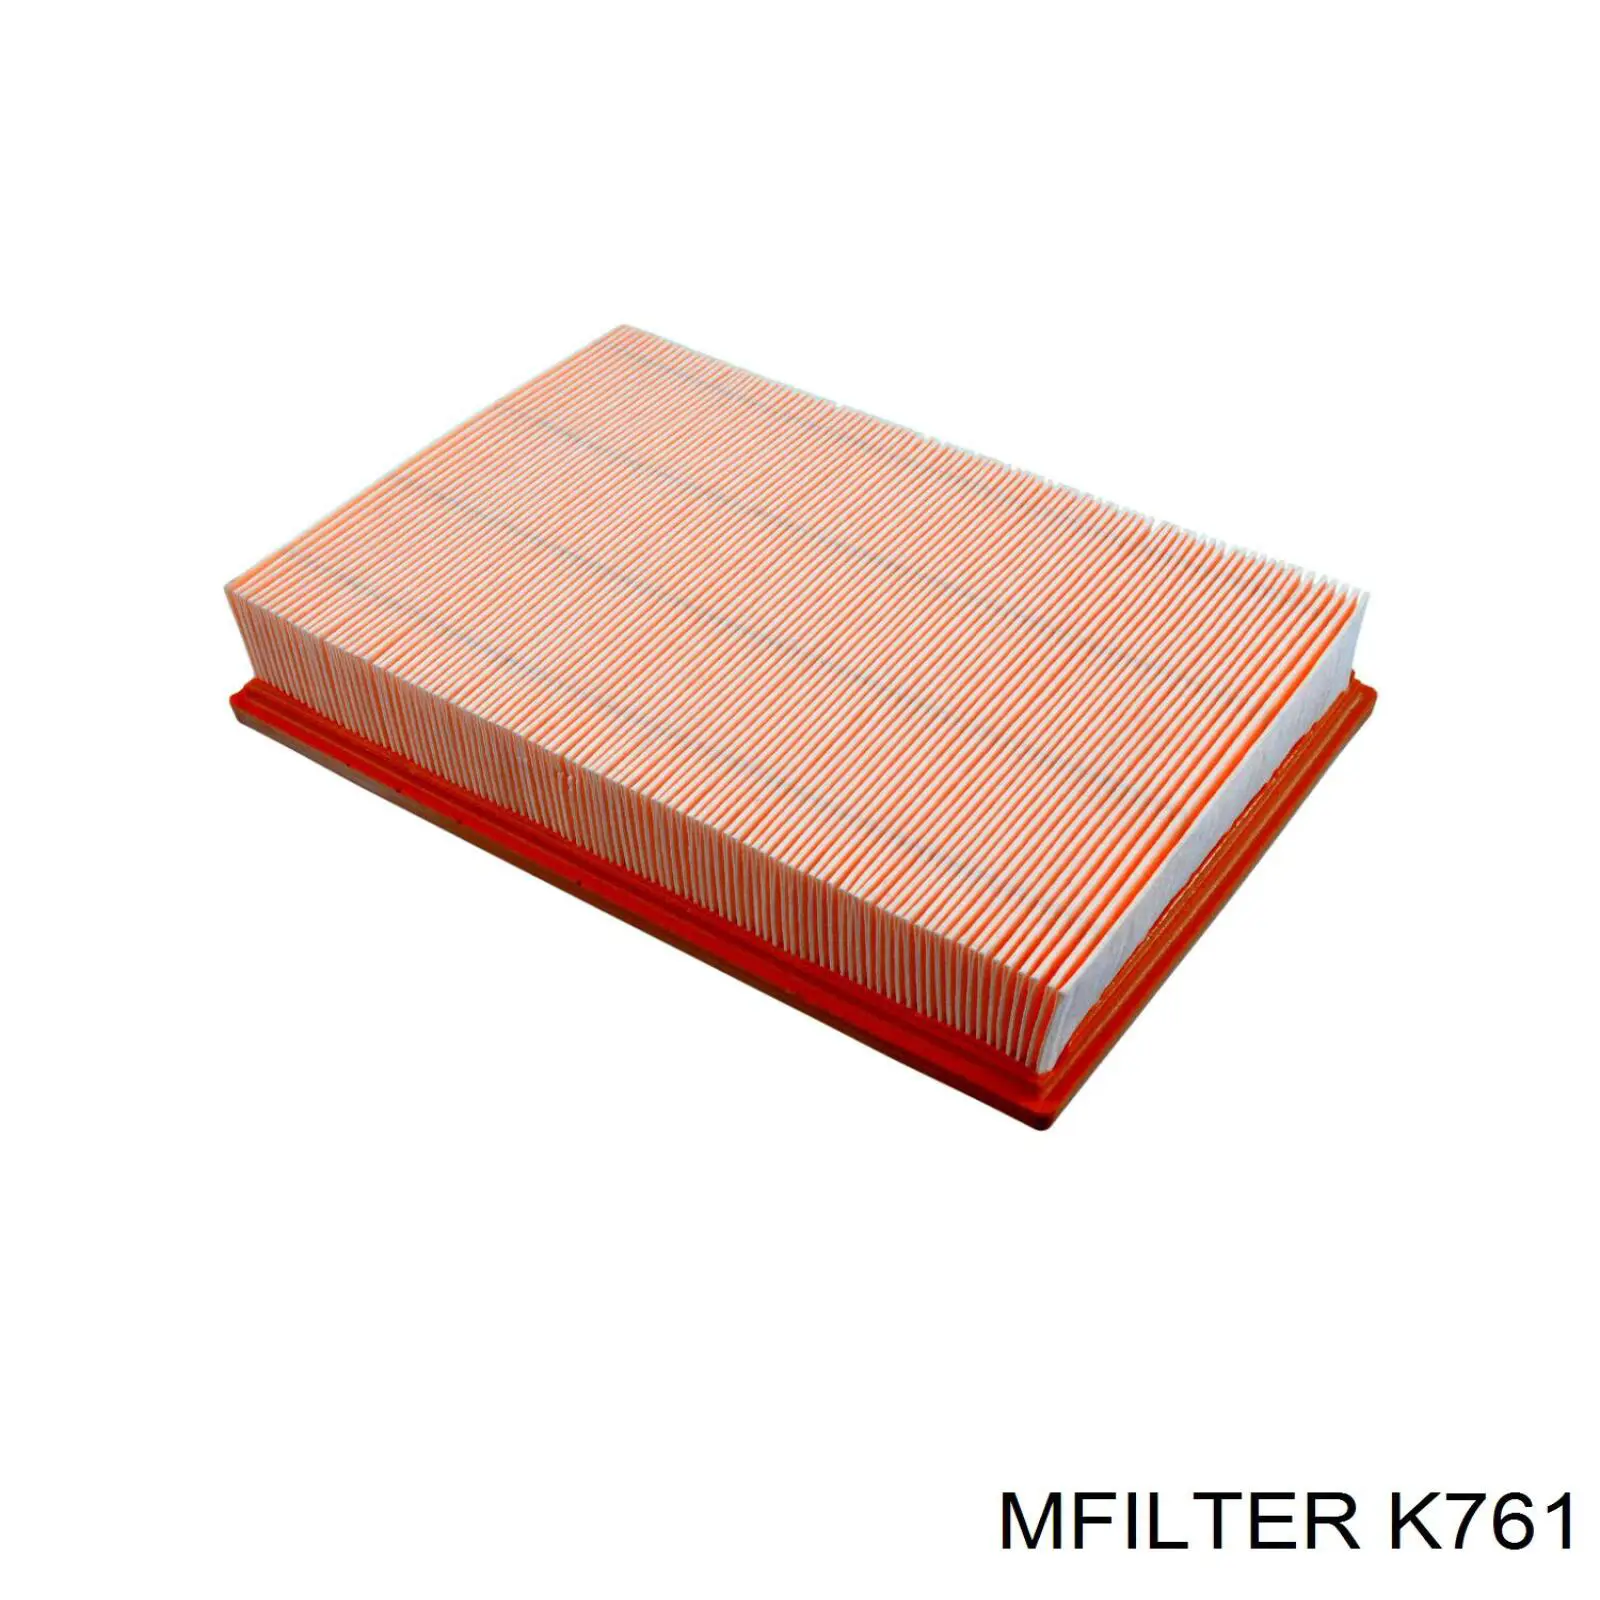 K761 Mfilter filtro de aire